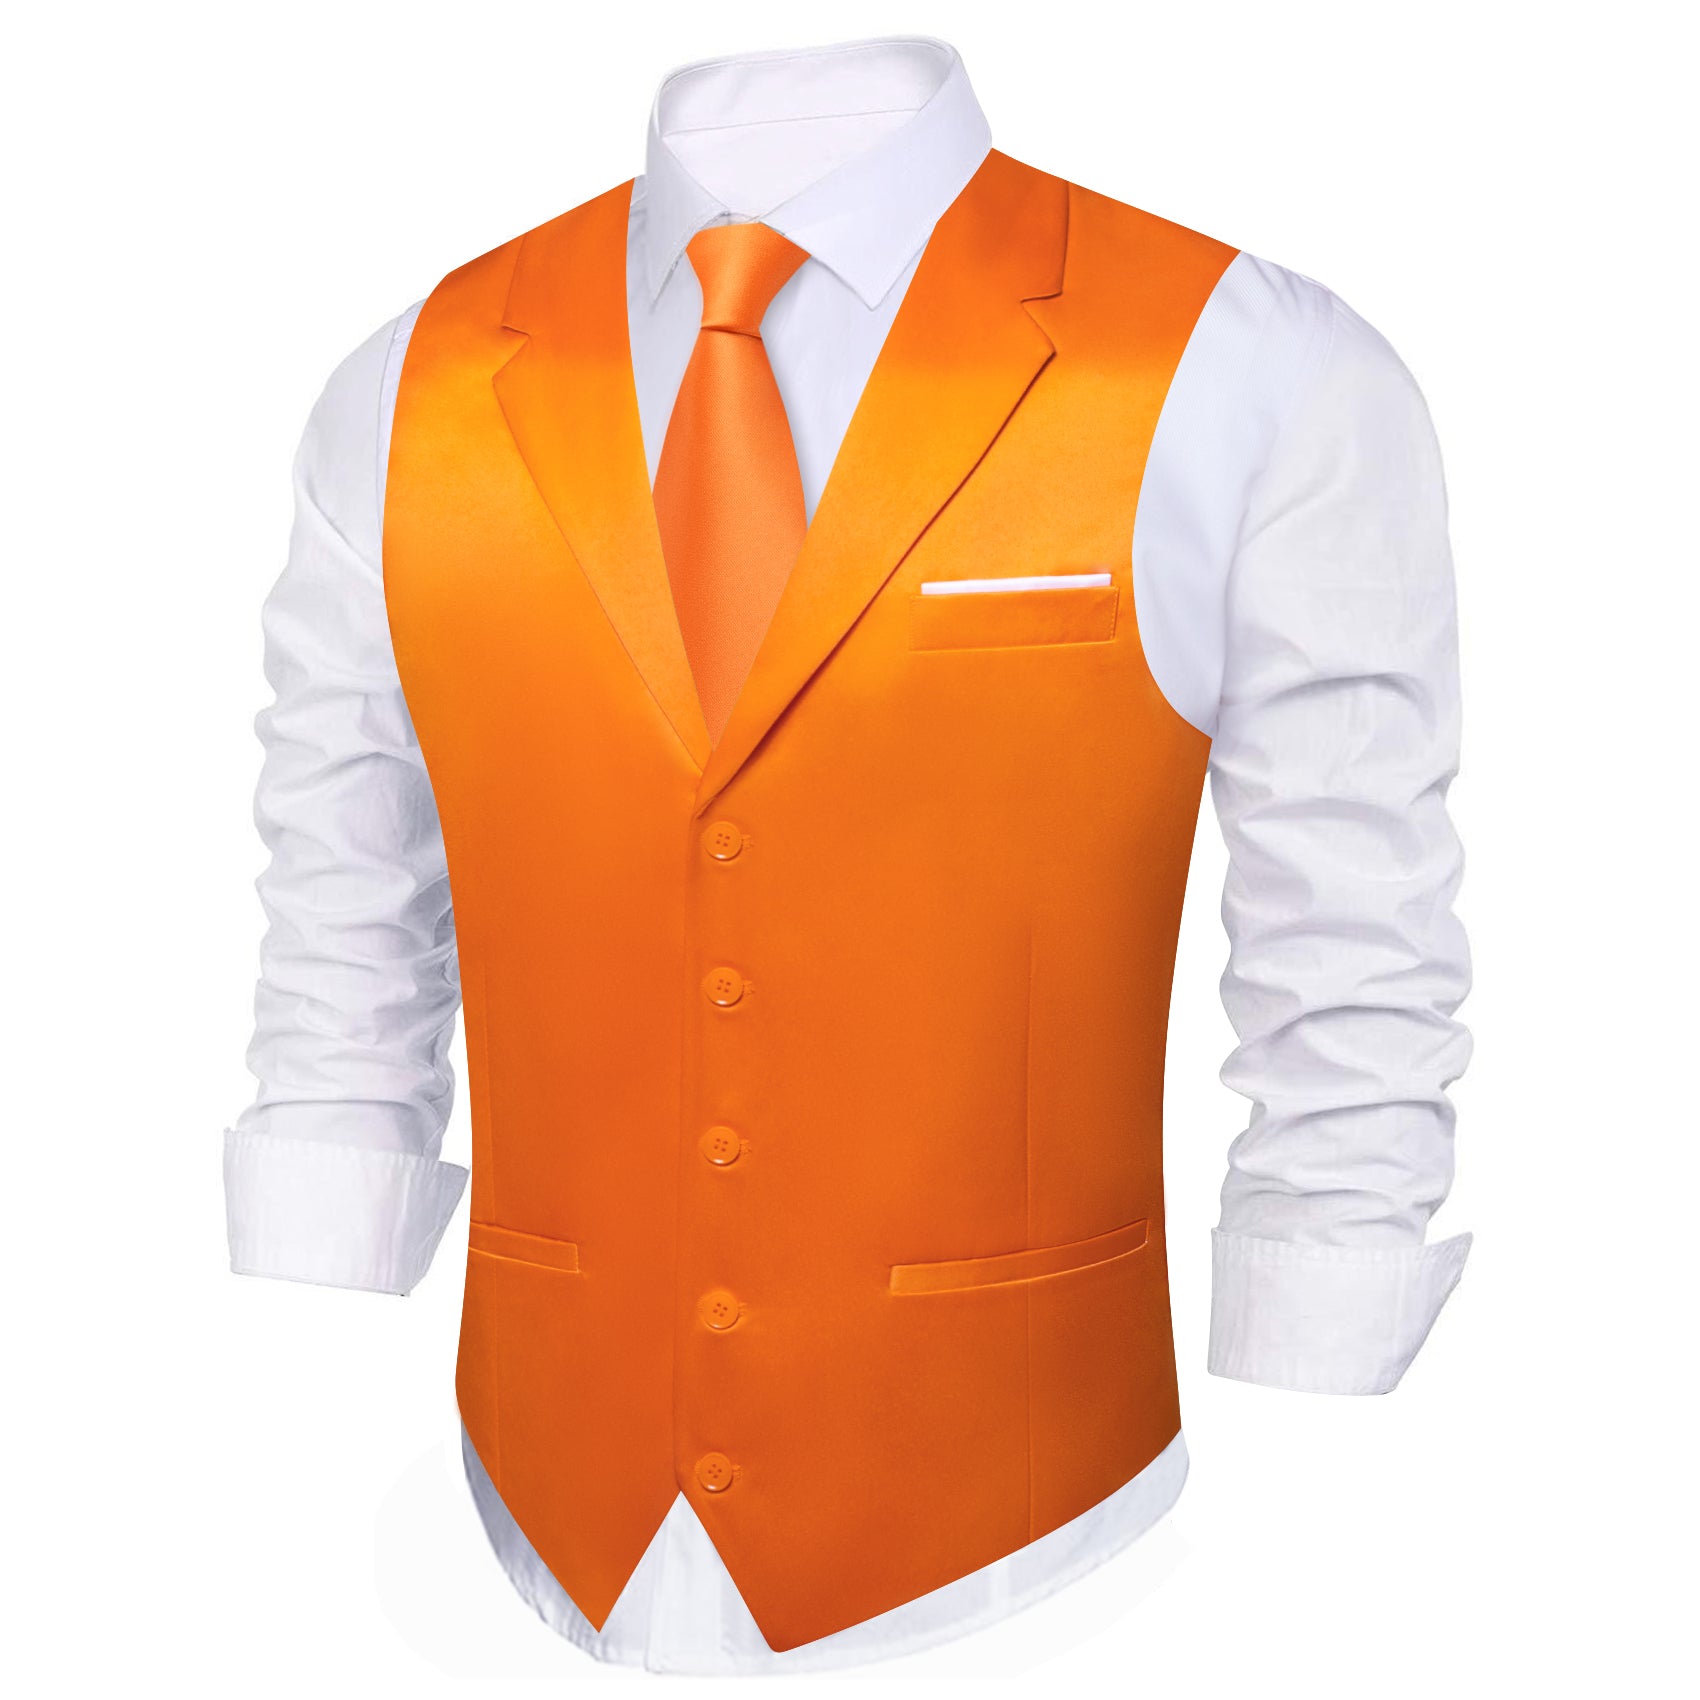 Barry.wang Orange Solid Vest Waistcoat Set